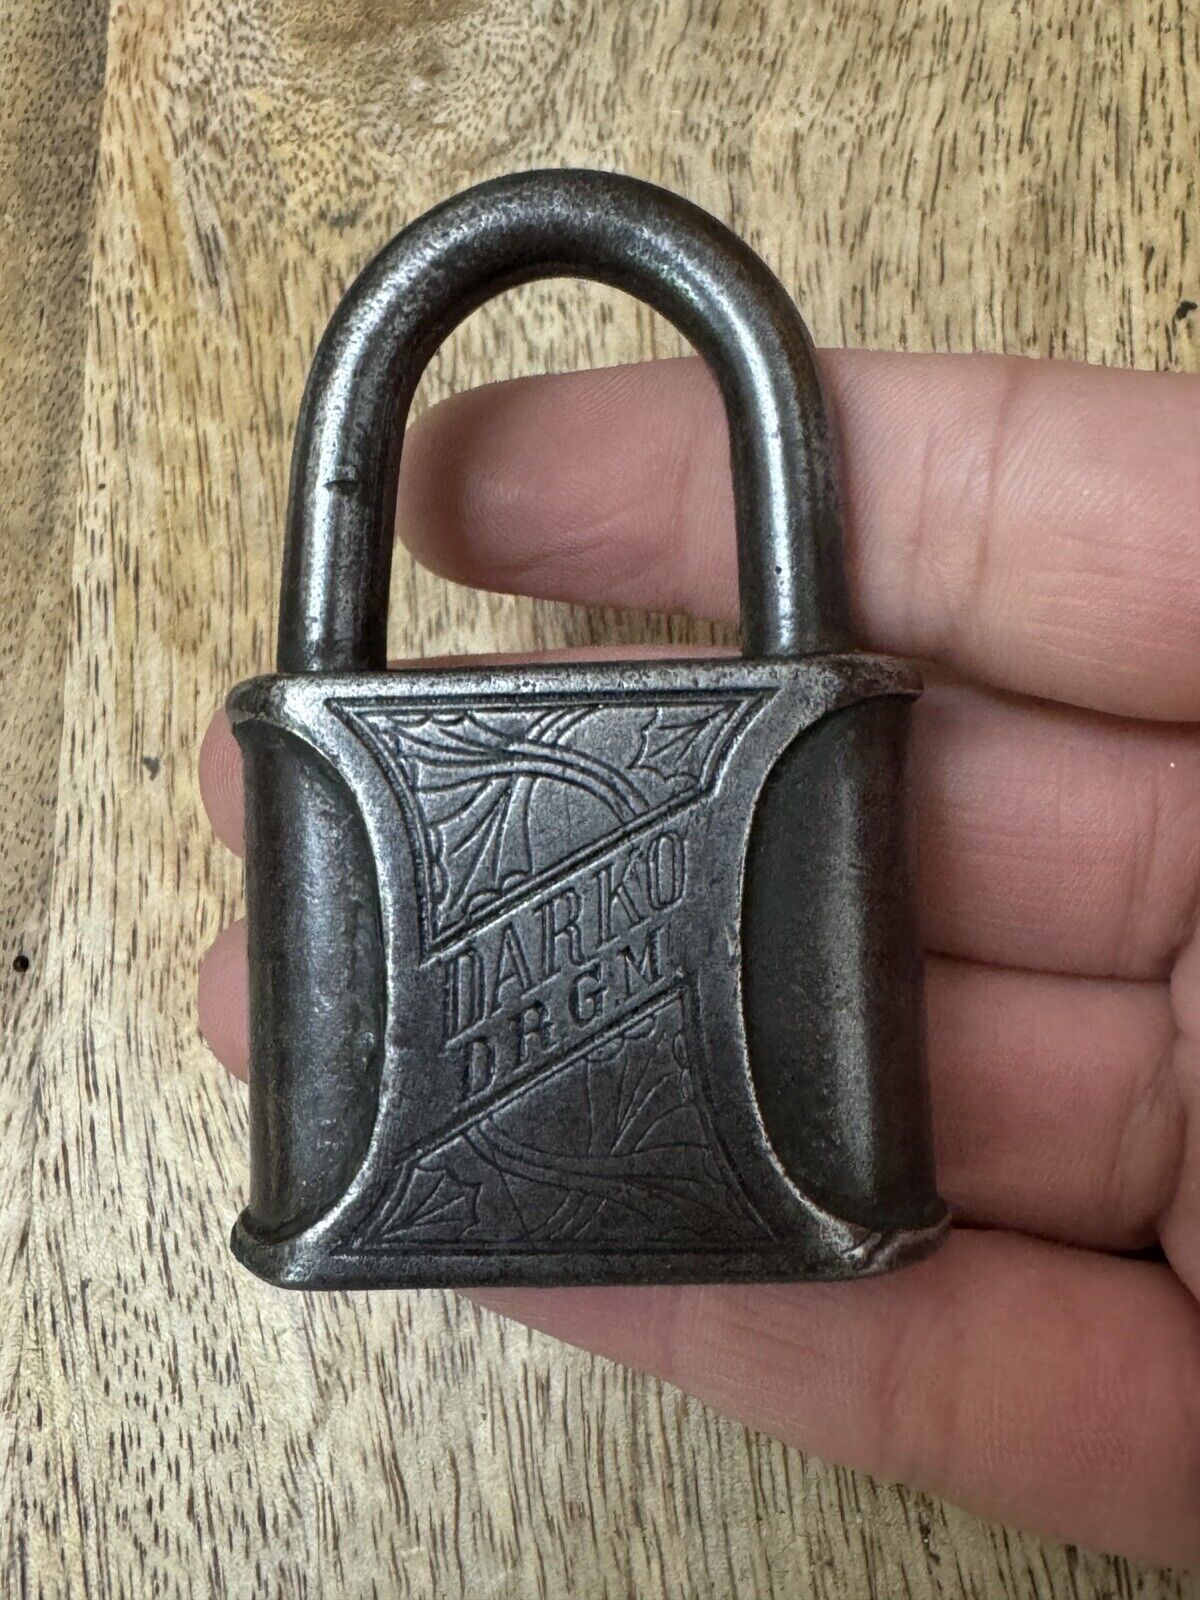 Vintage Antique Old D.R.G.M. Germany Padlock No Key Lock